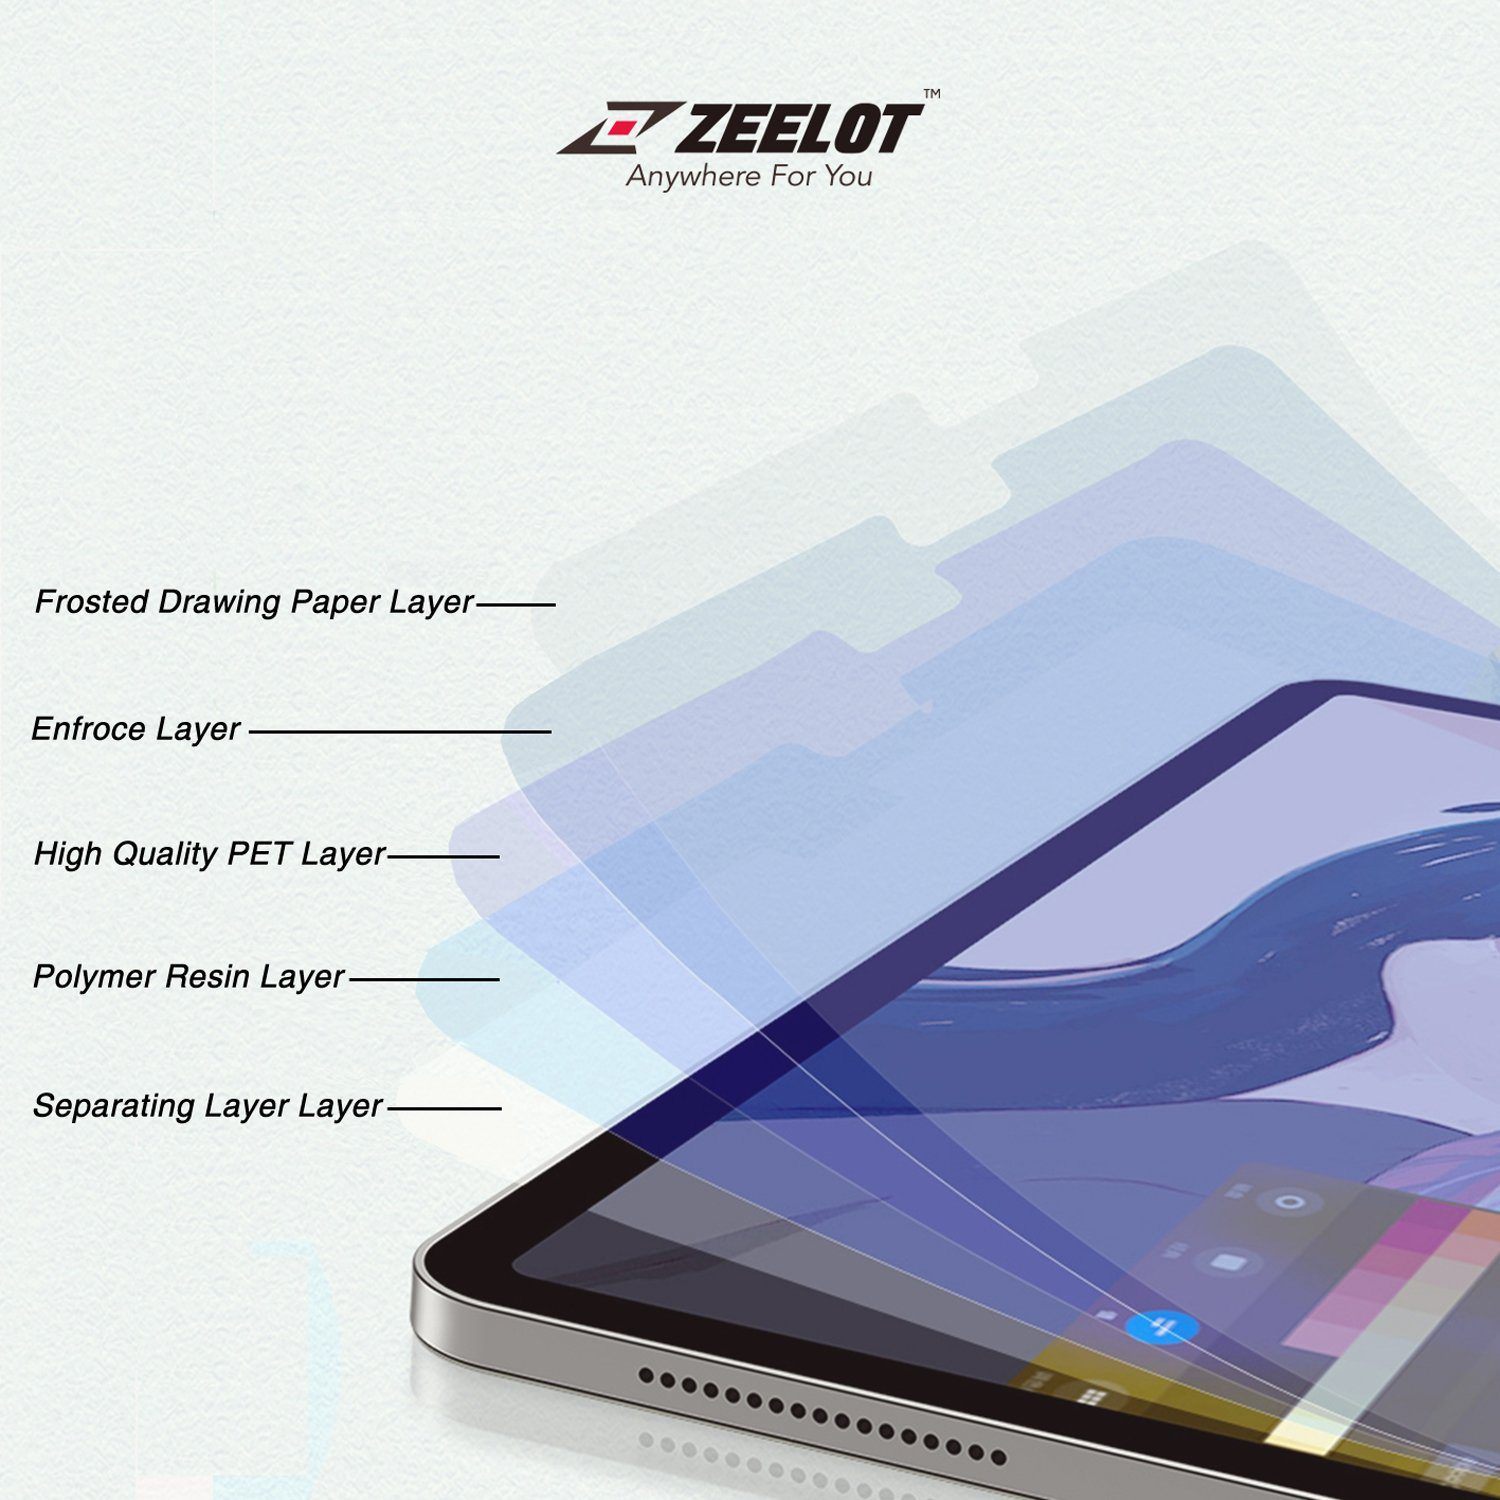 ZEELOT Paper Like Screen Protector for iPad Mini 5 7.9" (2019/2015), Clear Default ZEELOT 